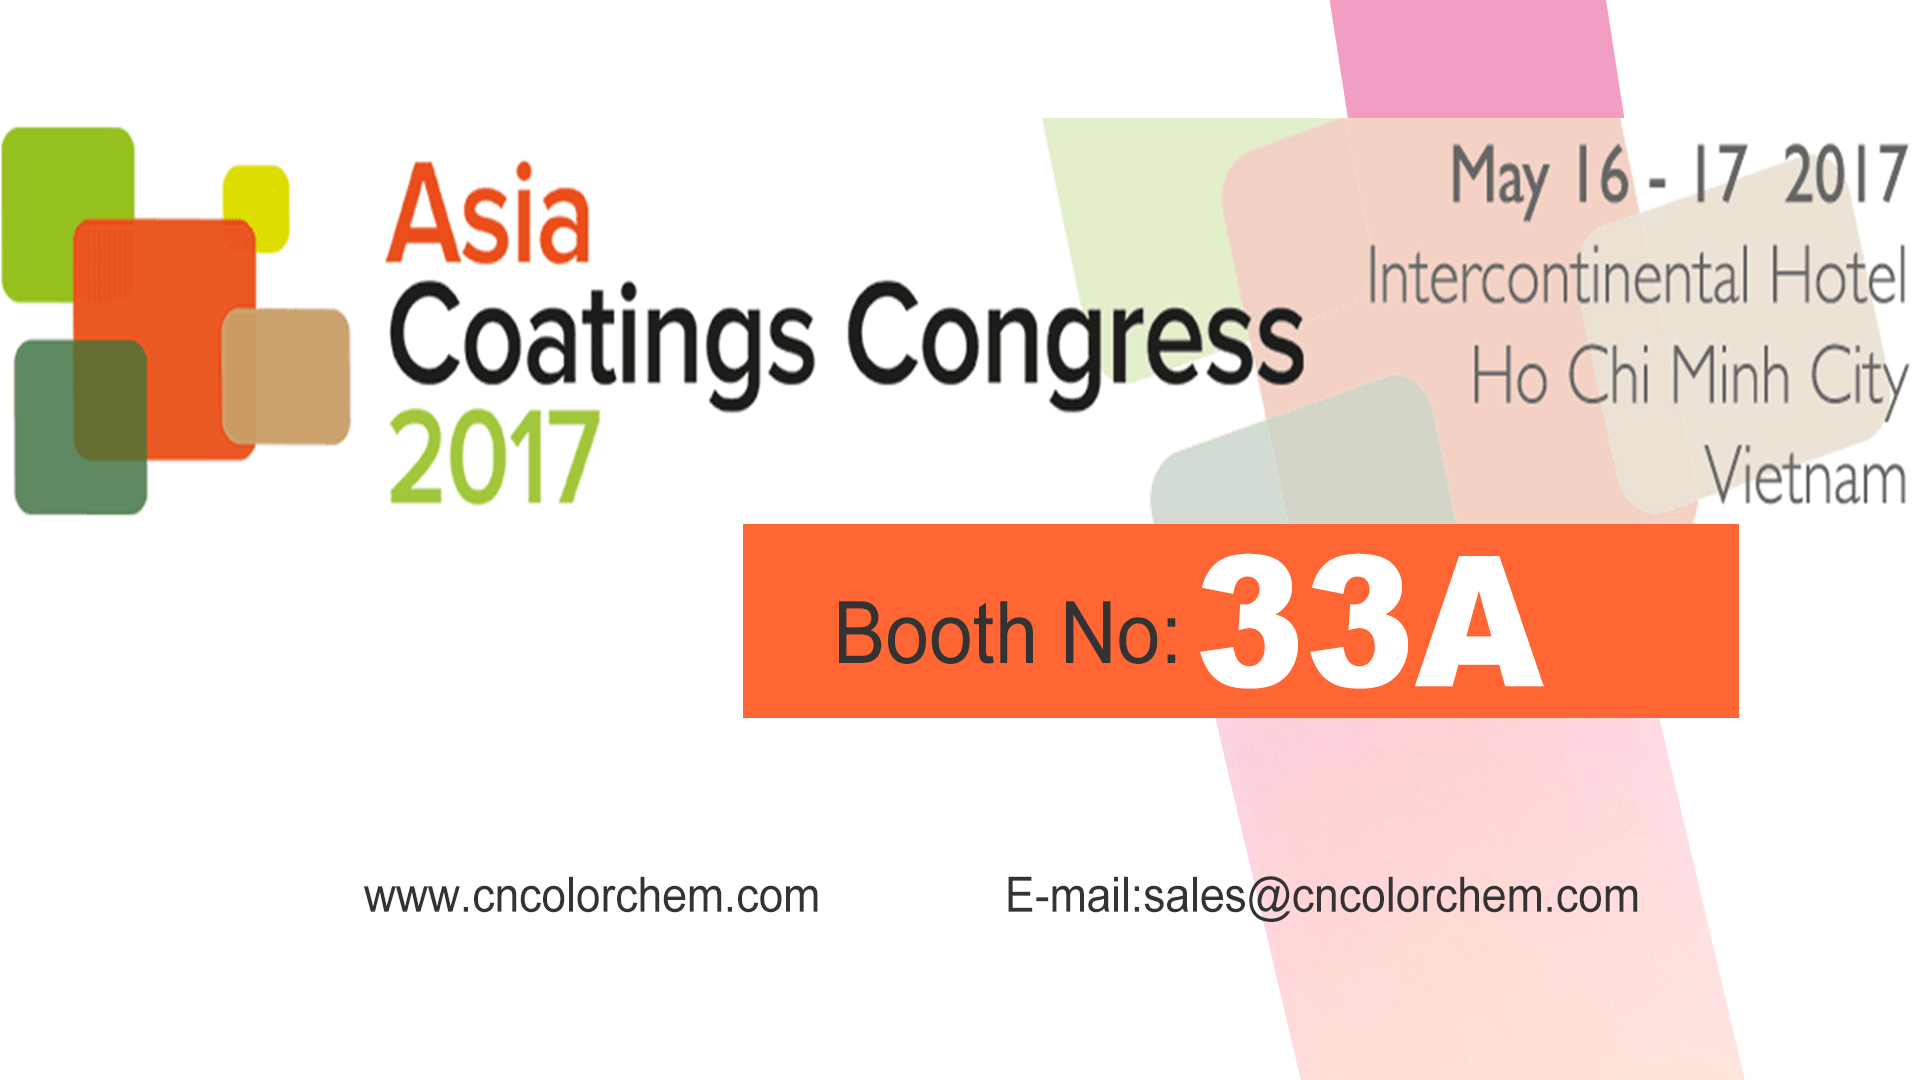 Congreso Asia Coatings 2017